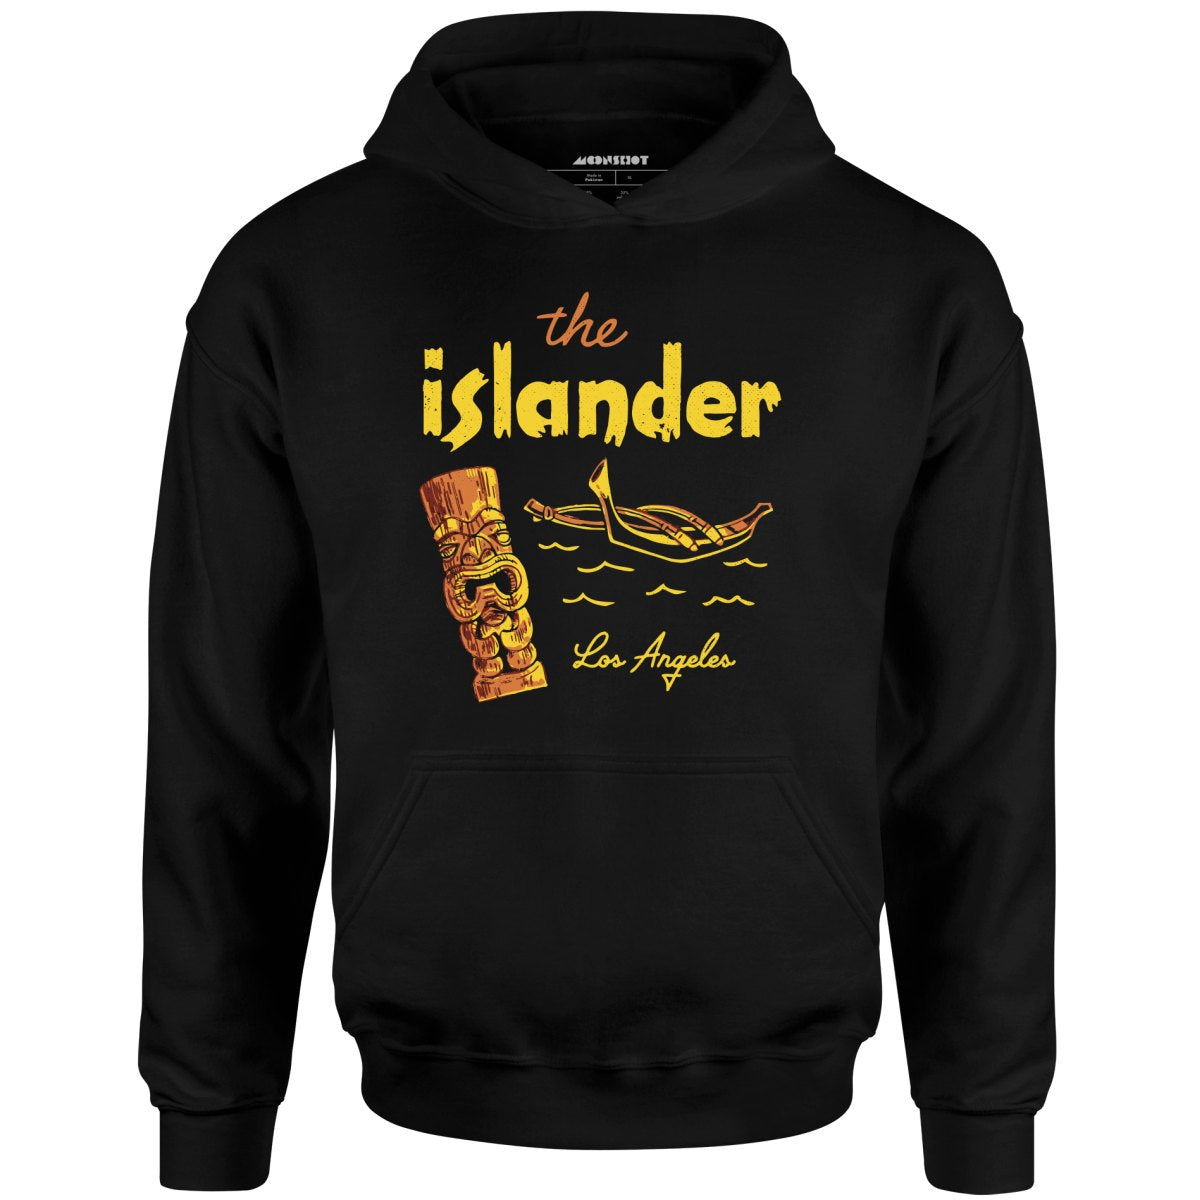 The Islander v2 - Los Angeles, CA - Vintage Tiki Bar - Unisex Hoodie